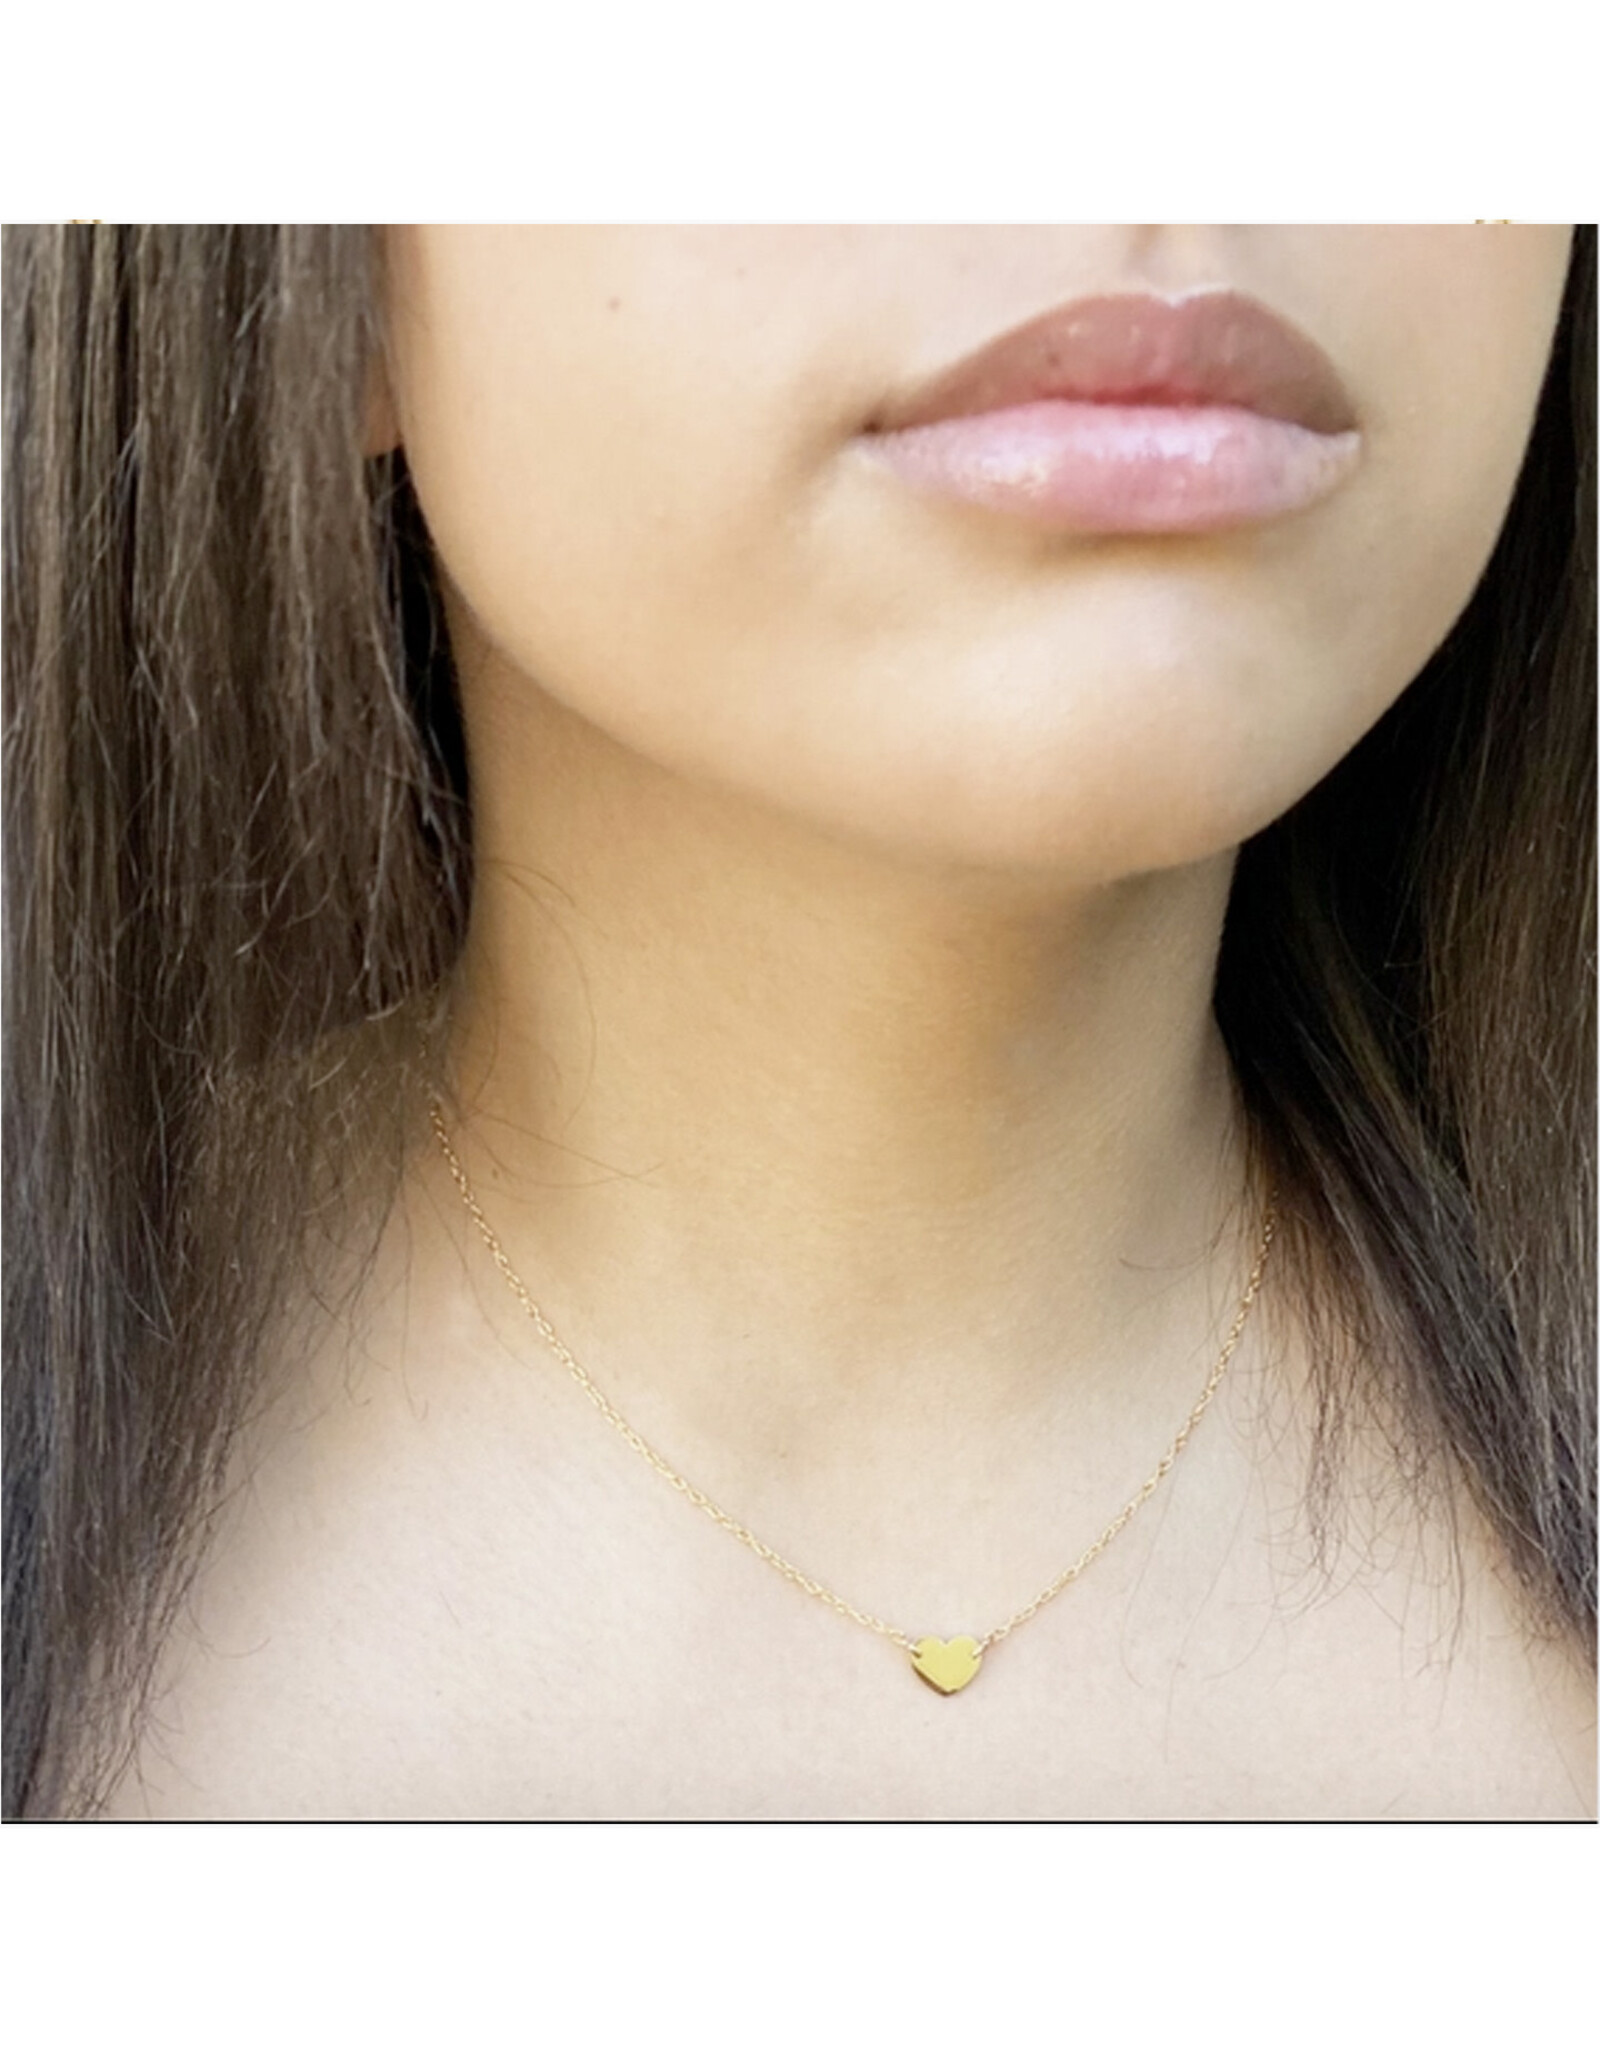 Mind's Eye Design Tiny Heart Necklace - Gold